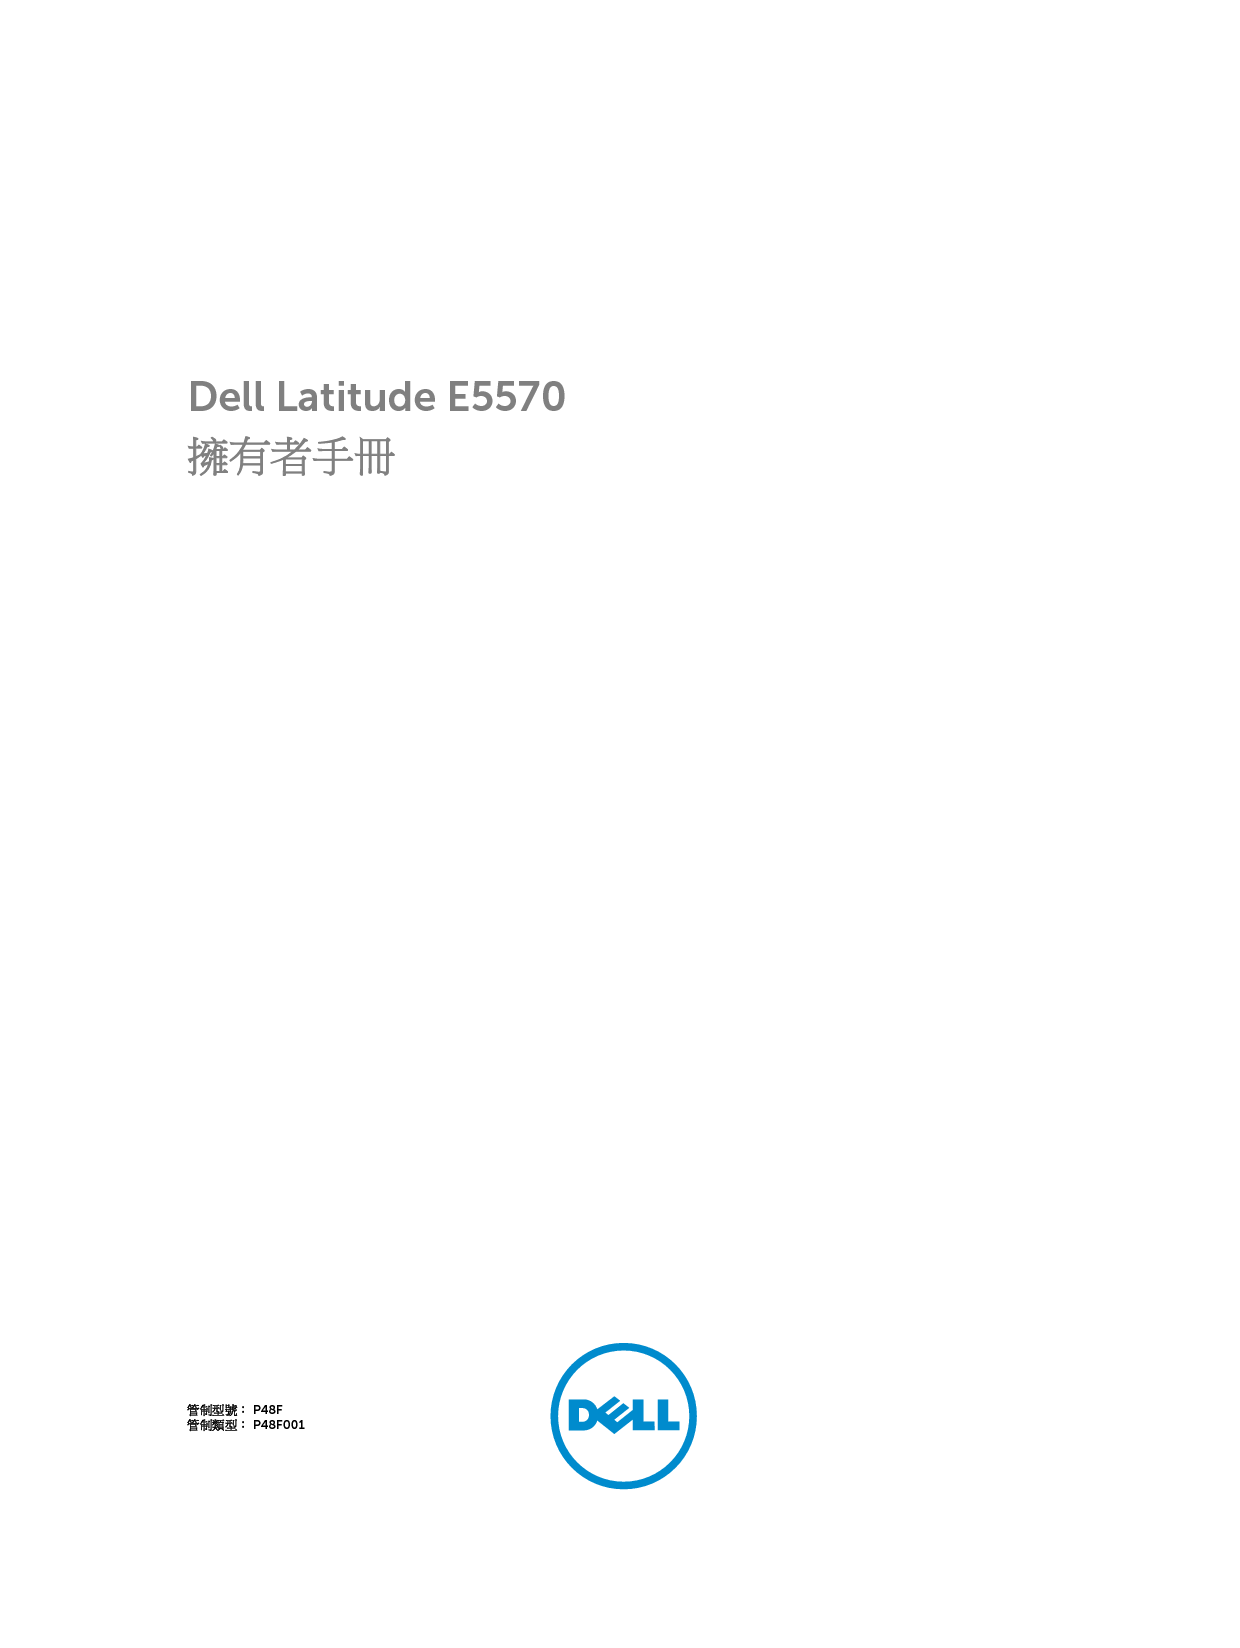 戴尔 Dell Latitude E5570 繁体 用户手册 封面